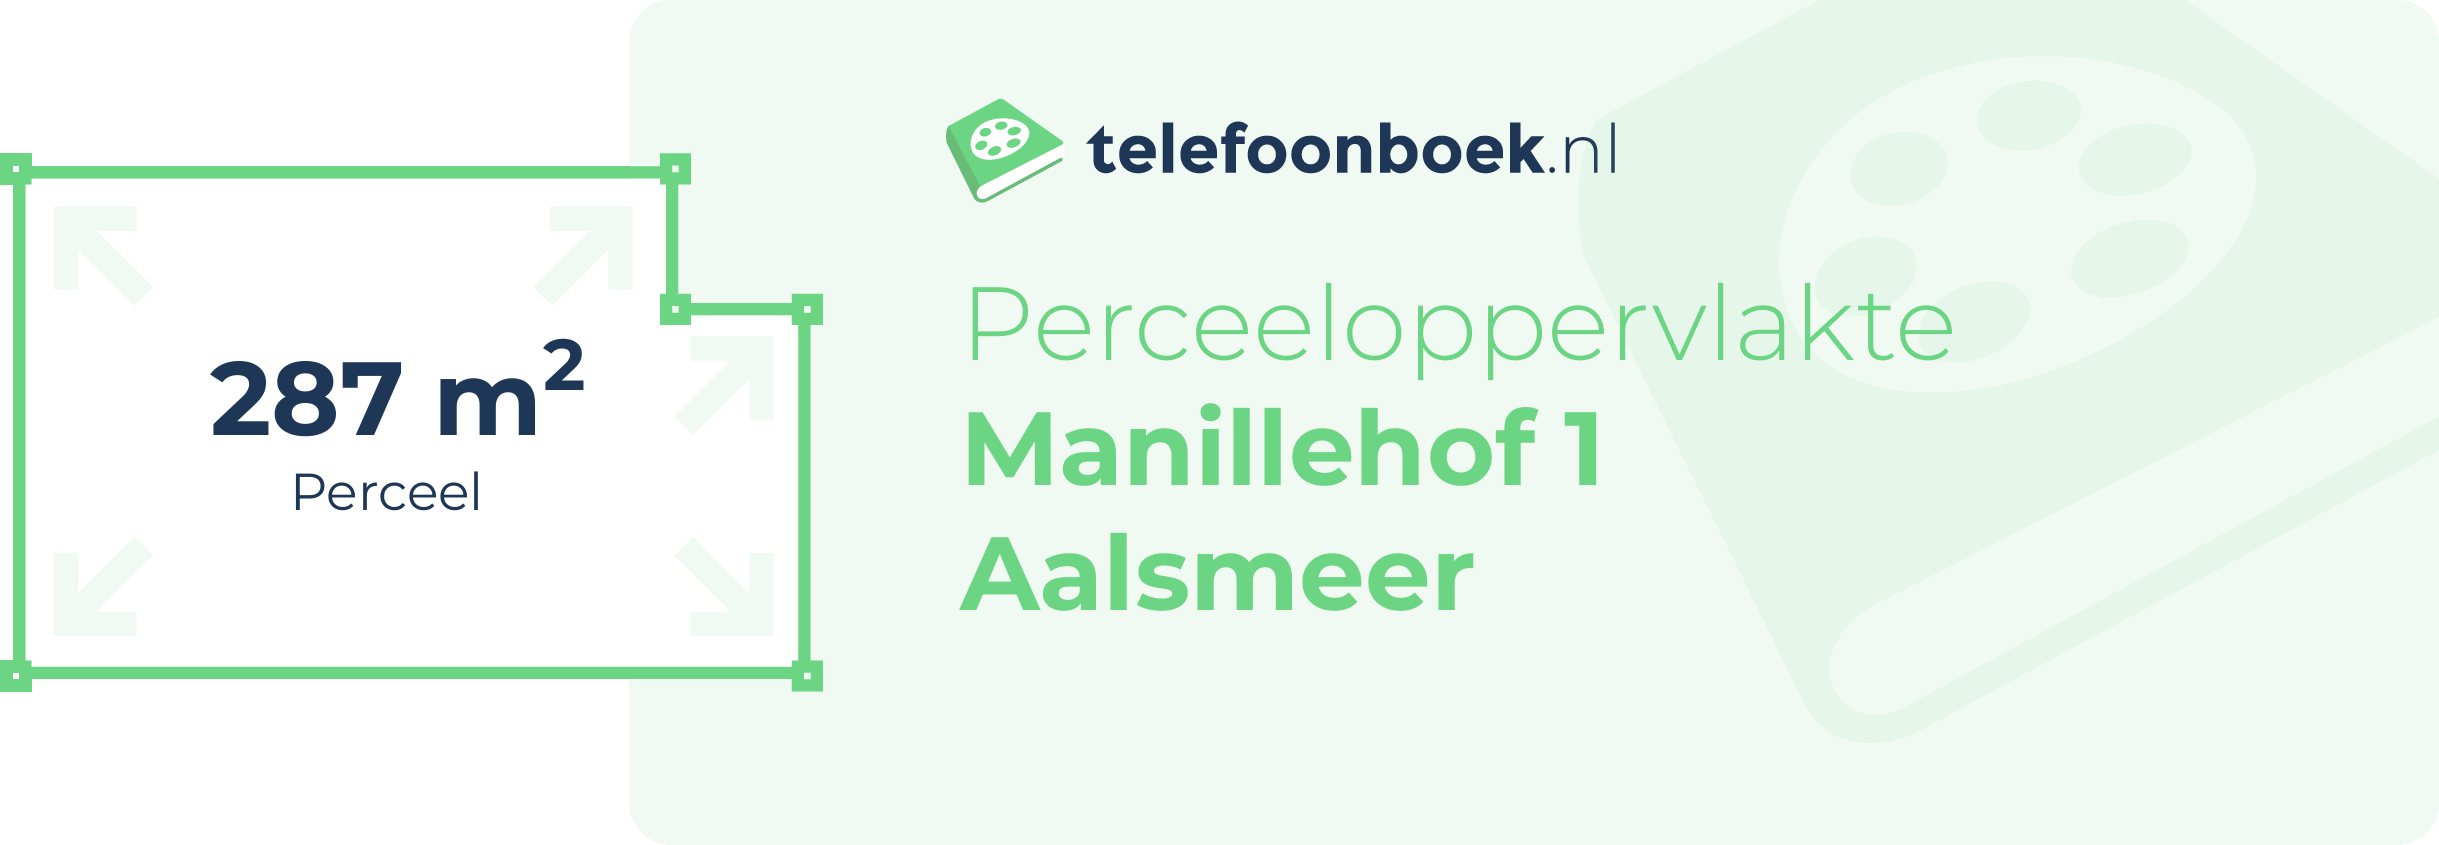 Perceeloppervlakte Manillehof 1 Aalsmeer